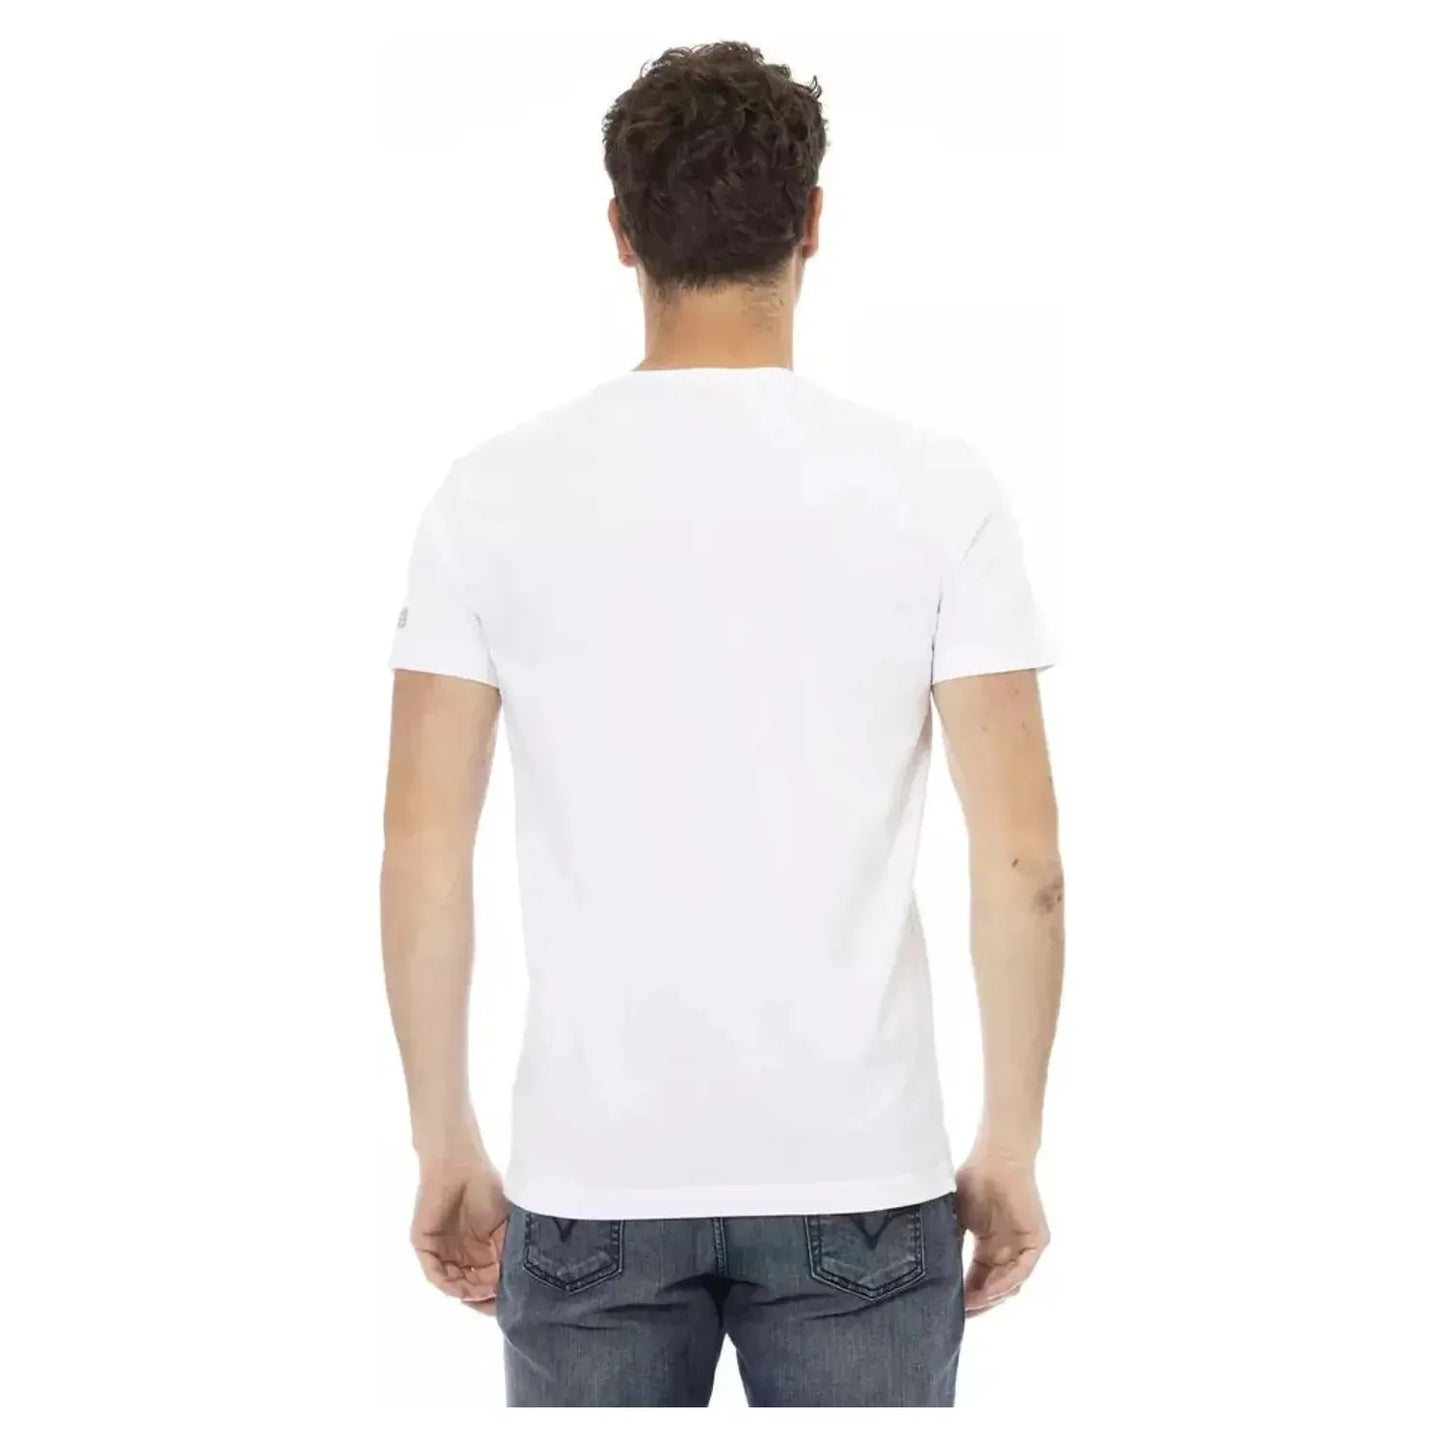 Trussardi Action Elegant Short Sleeve Round Neck T-shirt white-cotton-t-shirt-121